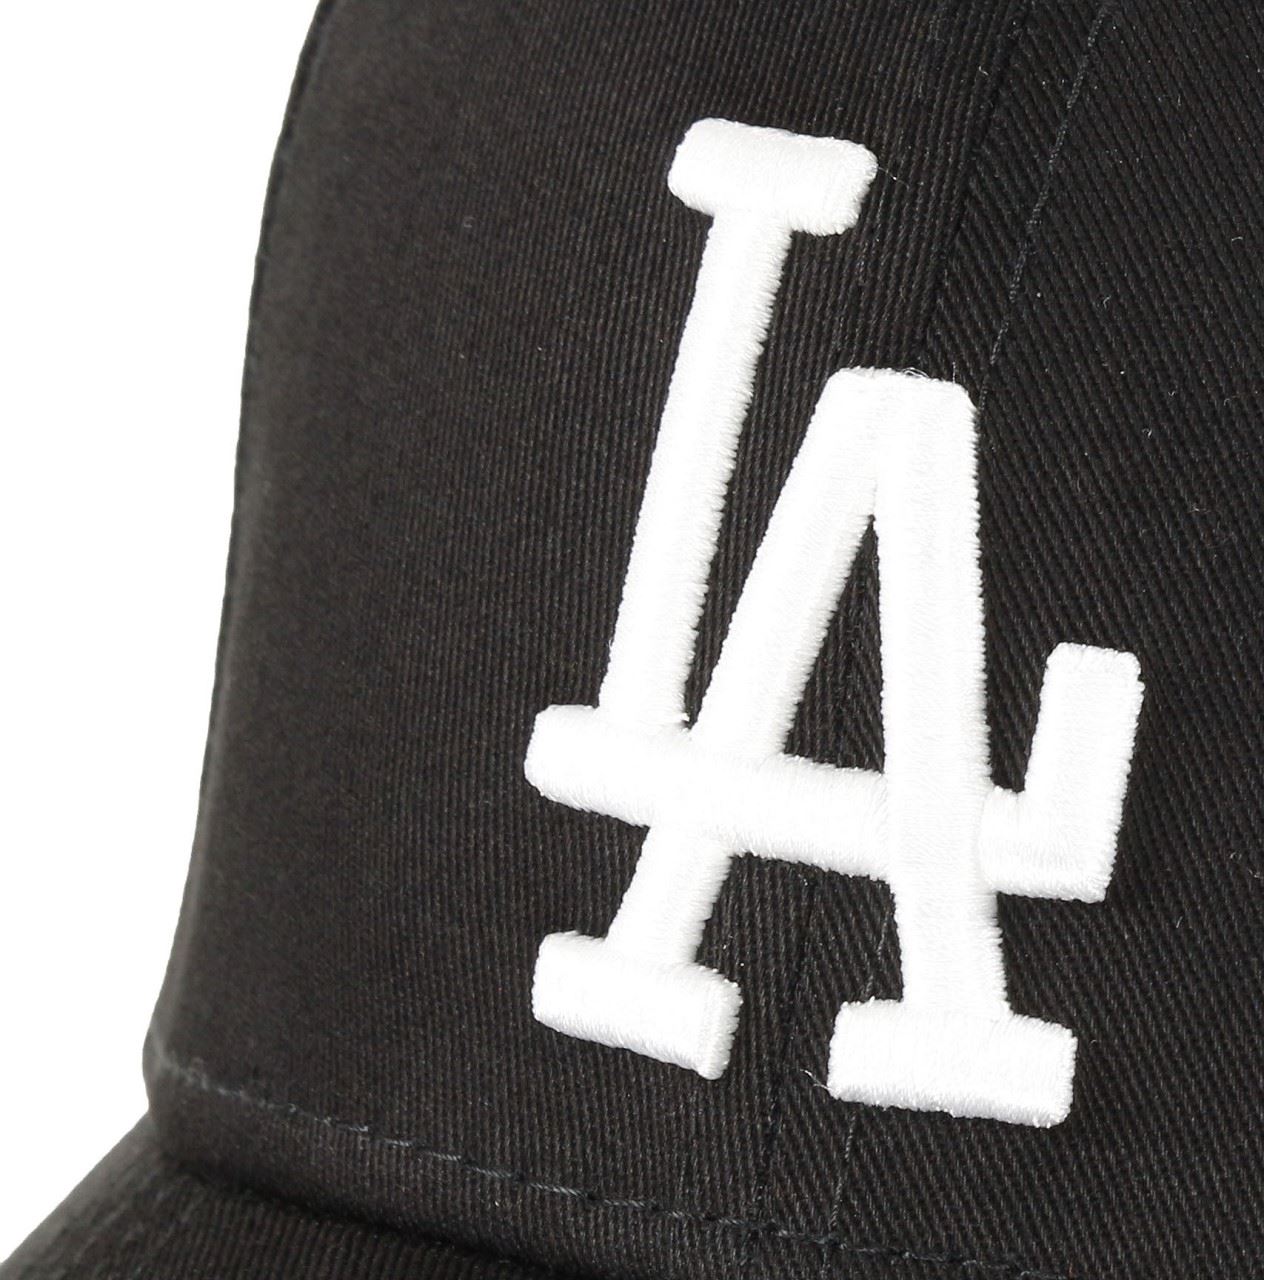 Los Angeles Dodgers MLB Rear Logo Black / White 9Forty Adjustable Cap New Era